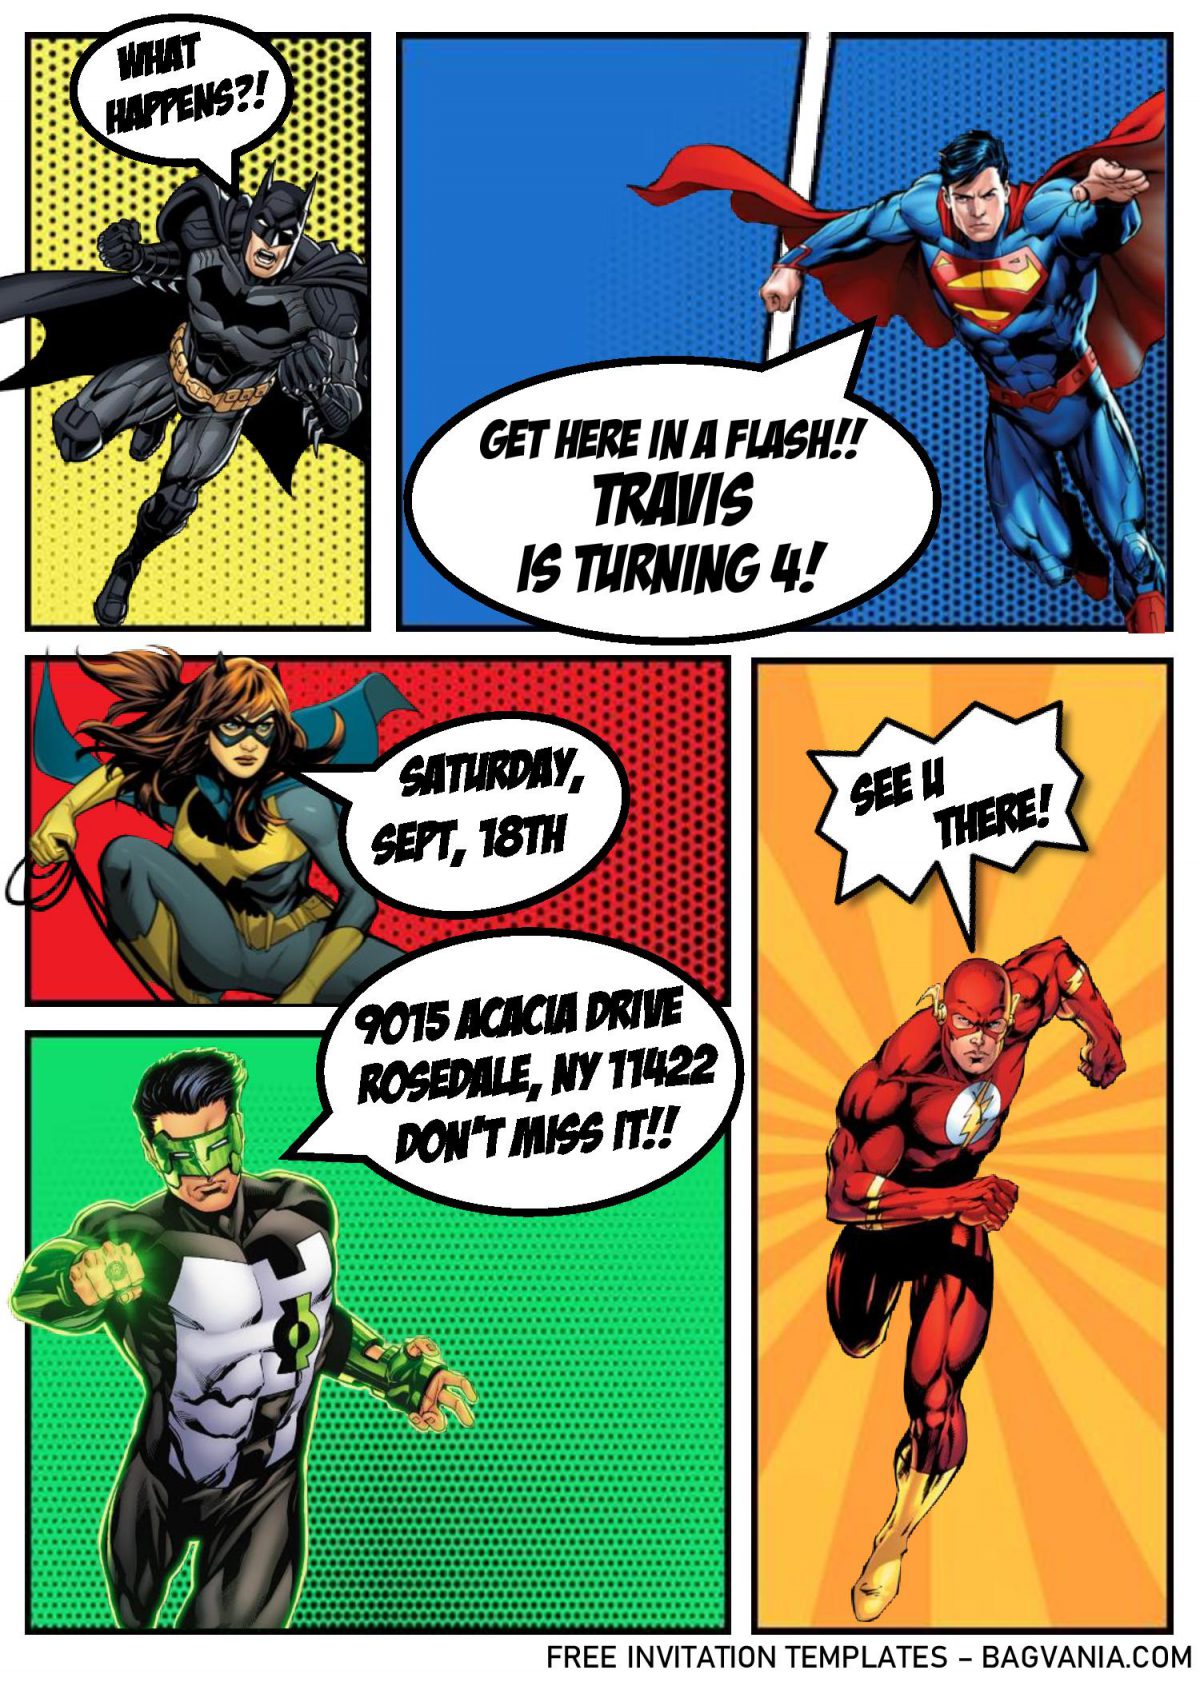 Superhero Comic Invitation Templates - Editable With MS Word